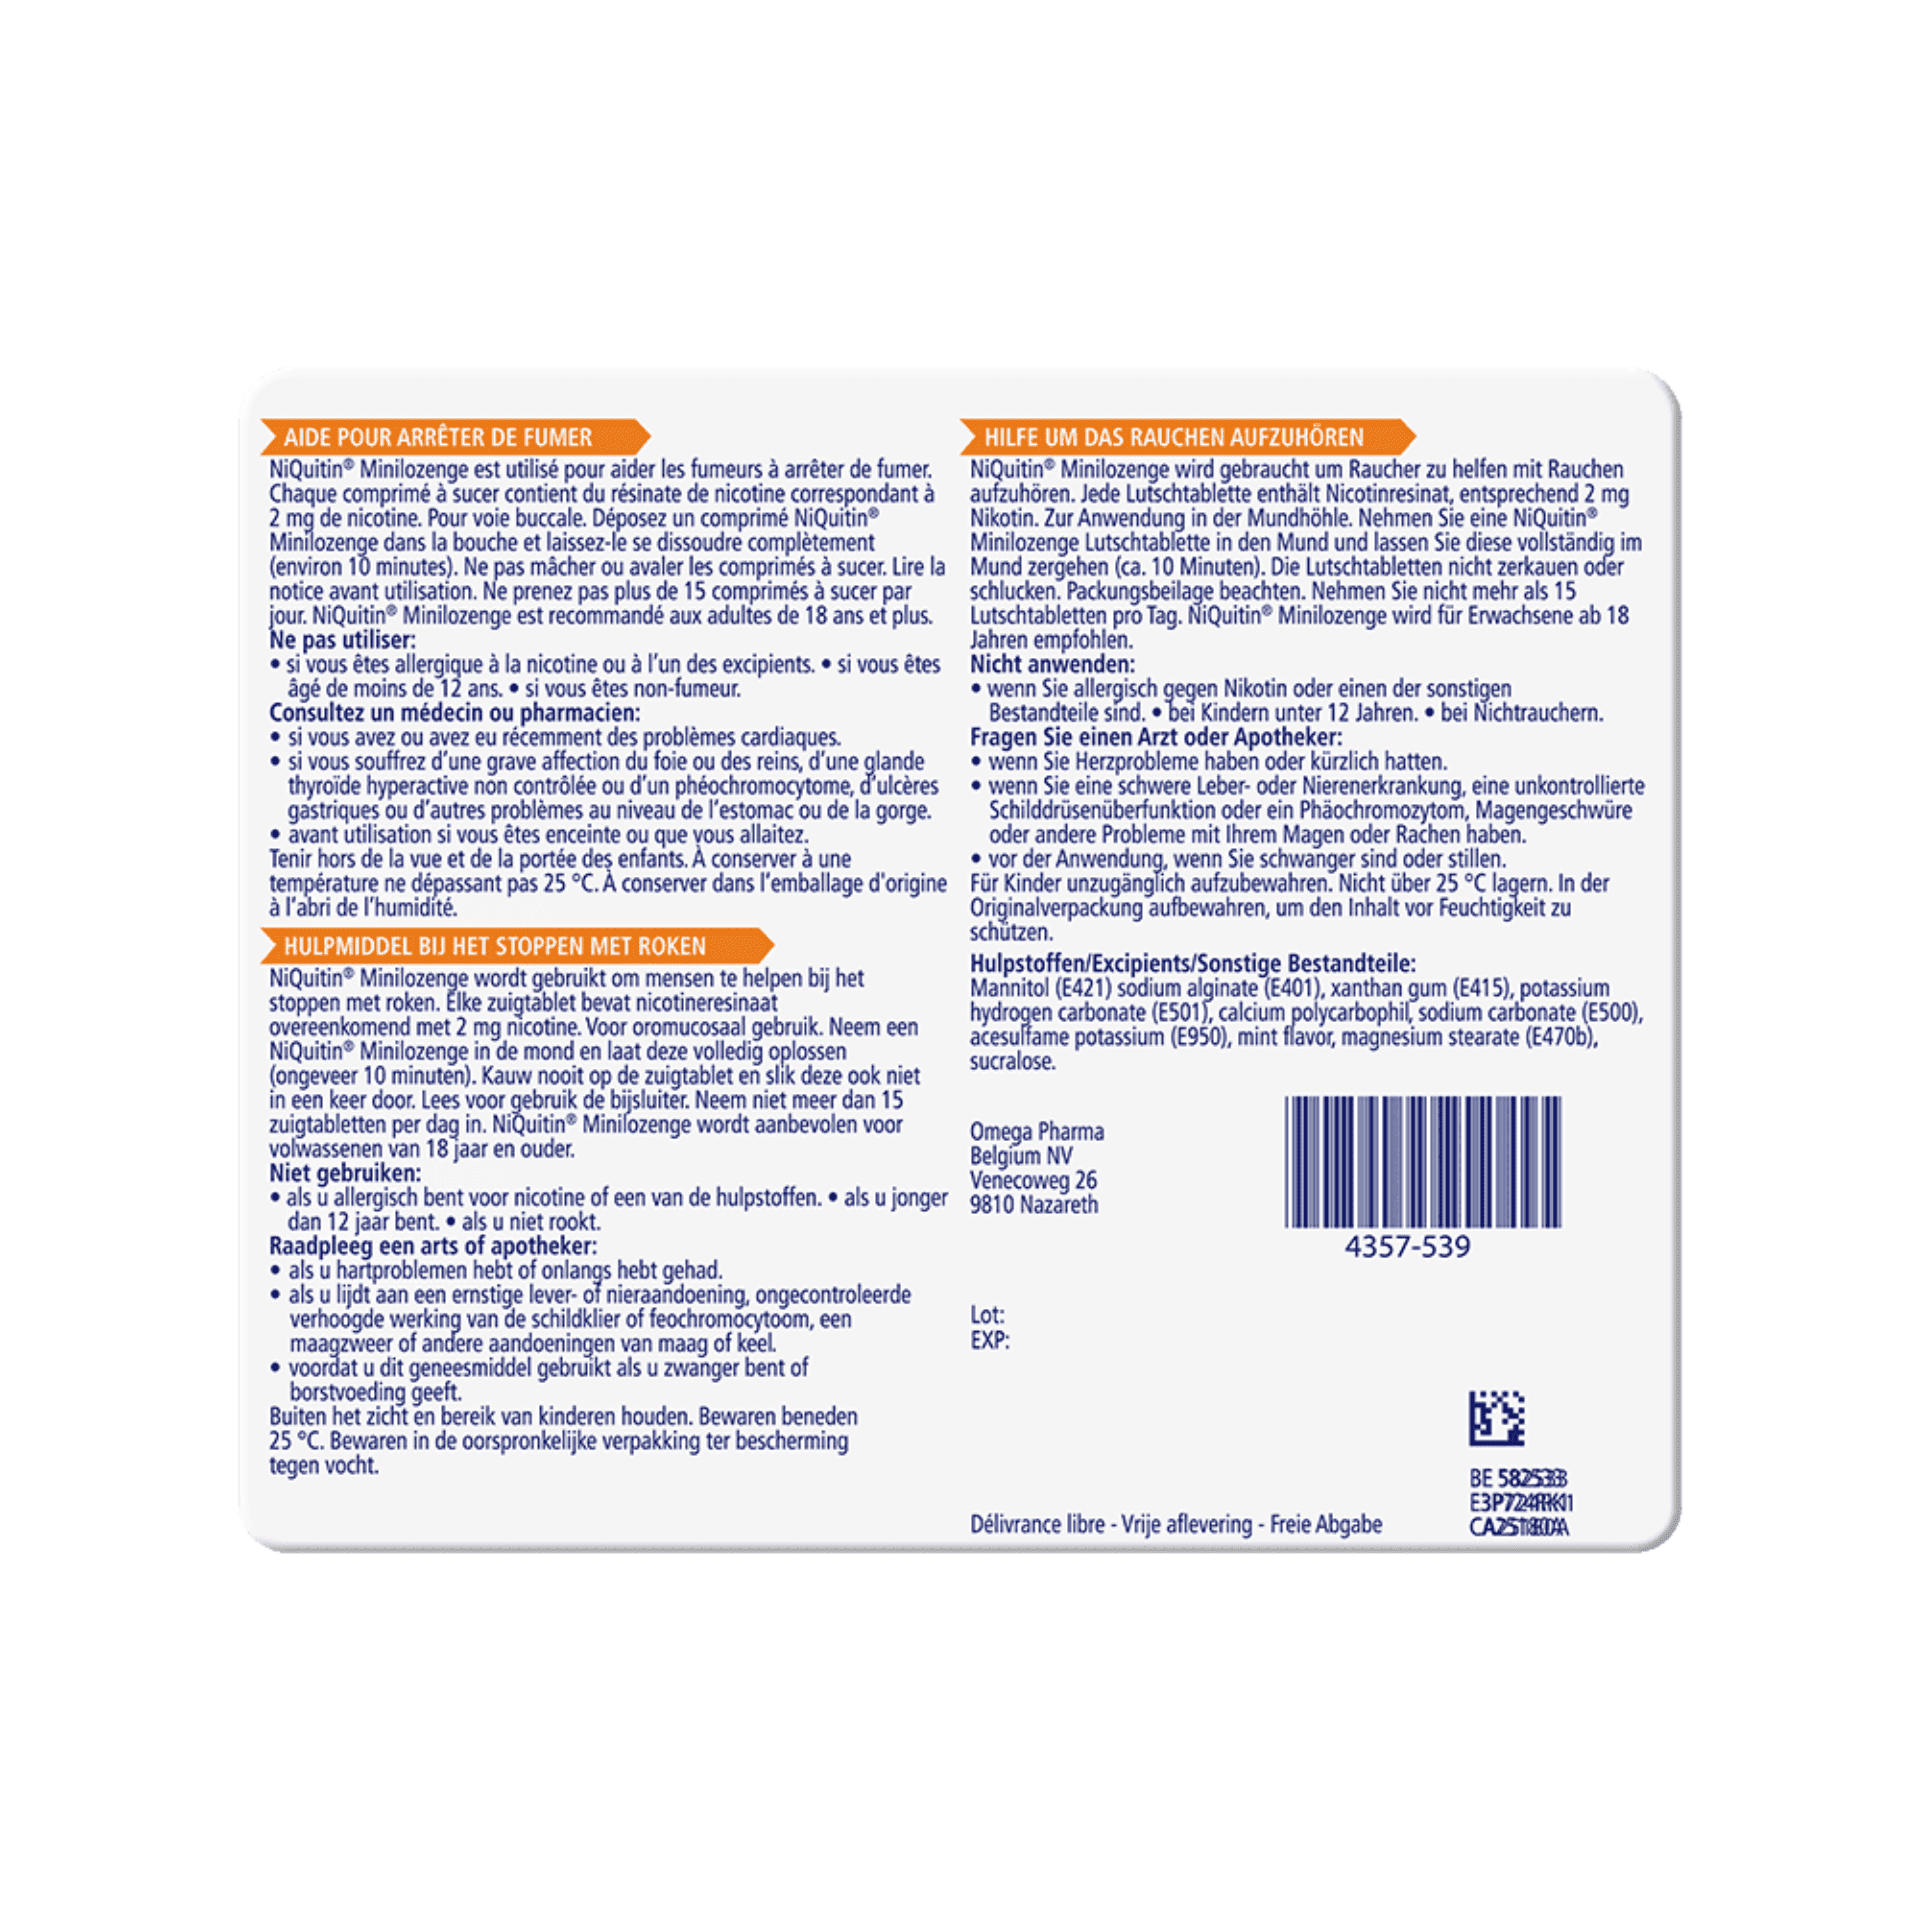 NiQuitin Minilozenge 2 mg 60 zuigtabletten